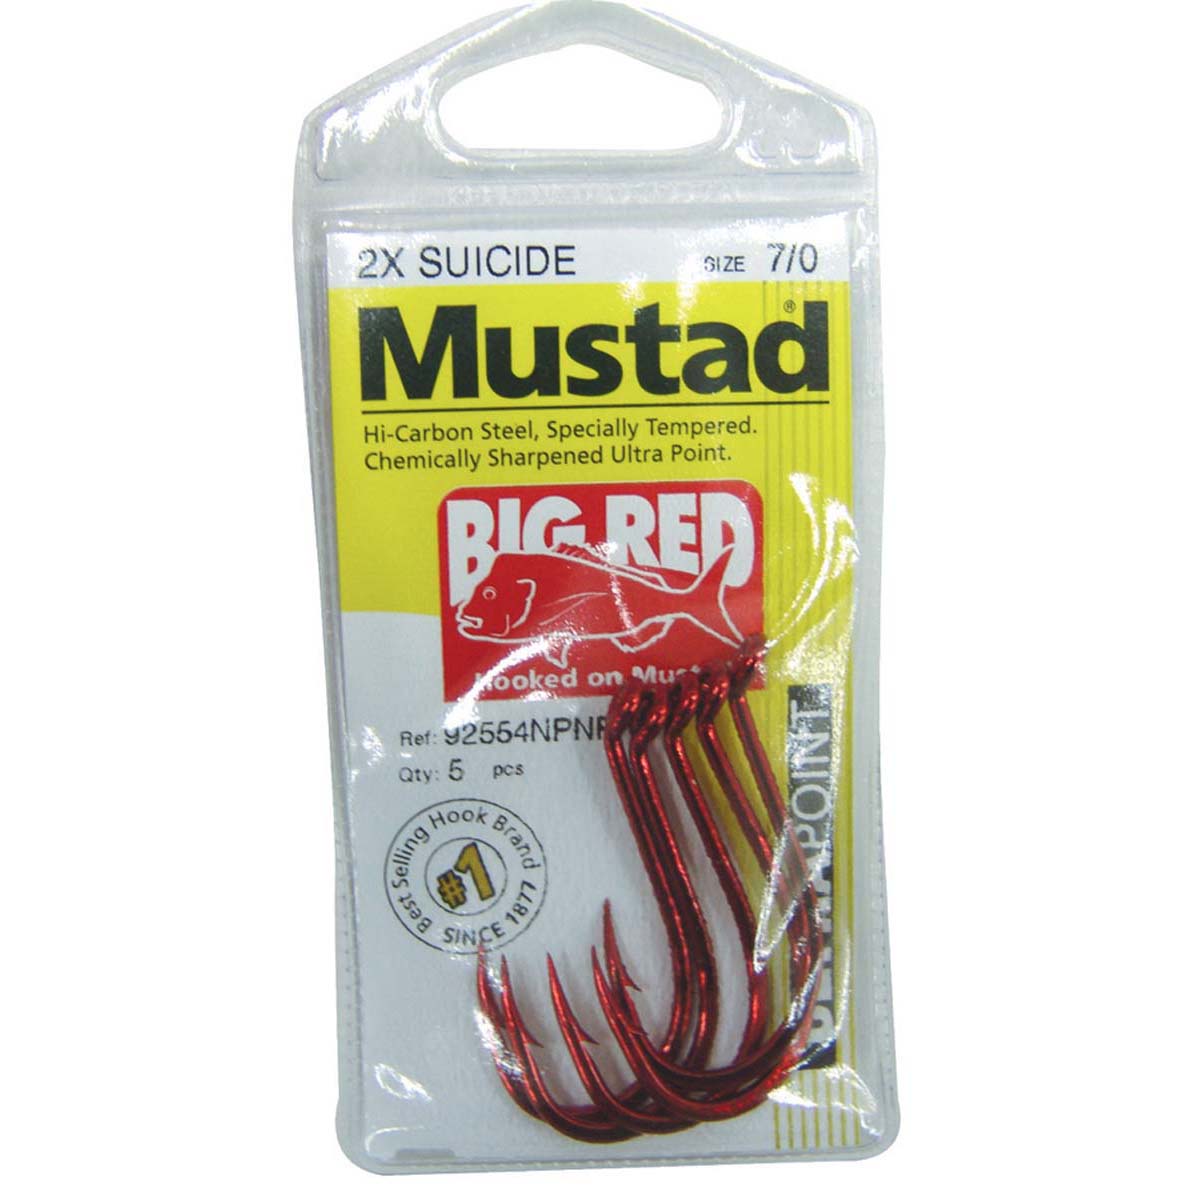 Mustad Big Red Suicide Hooks 2 / 0 8 Pack